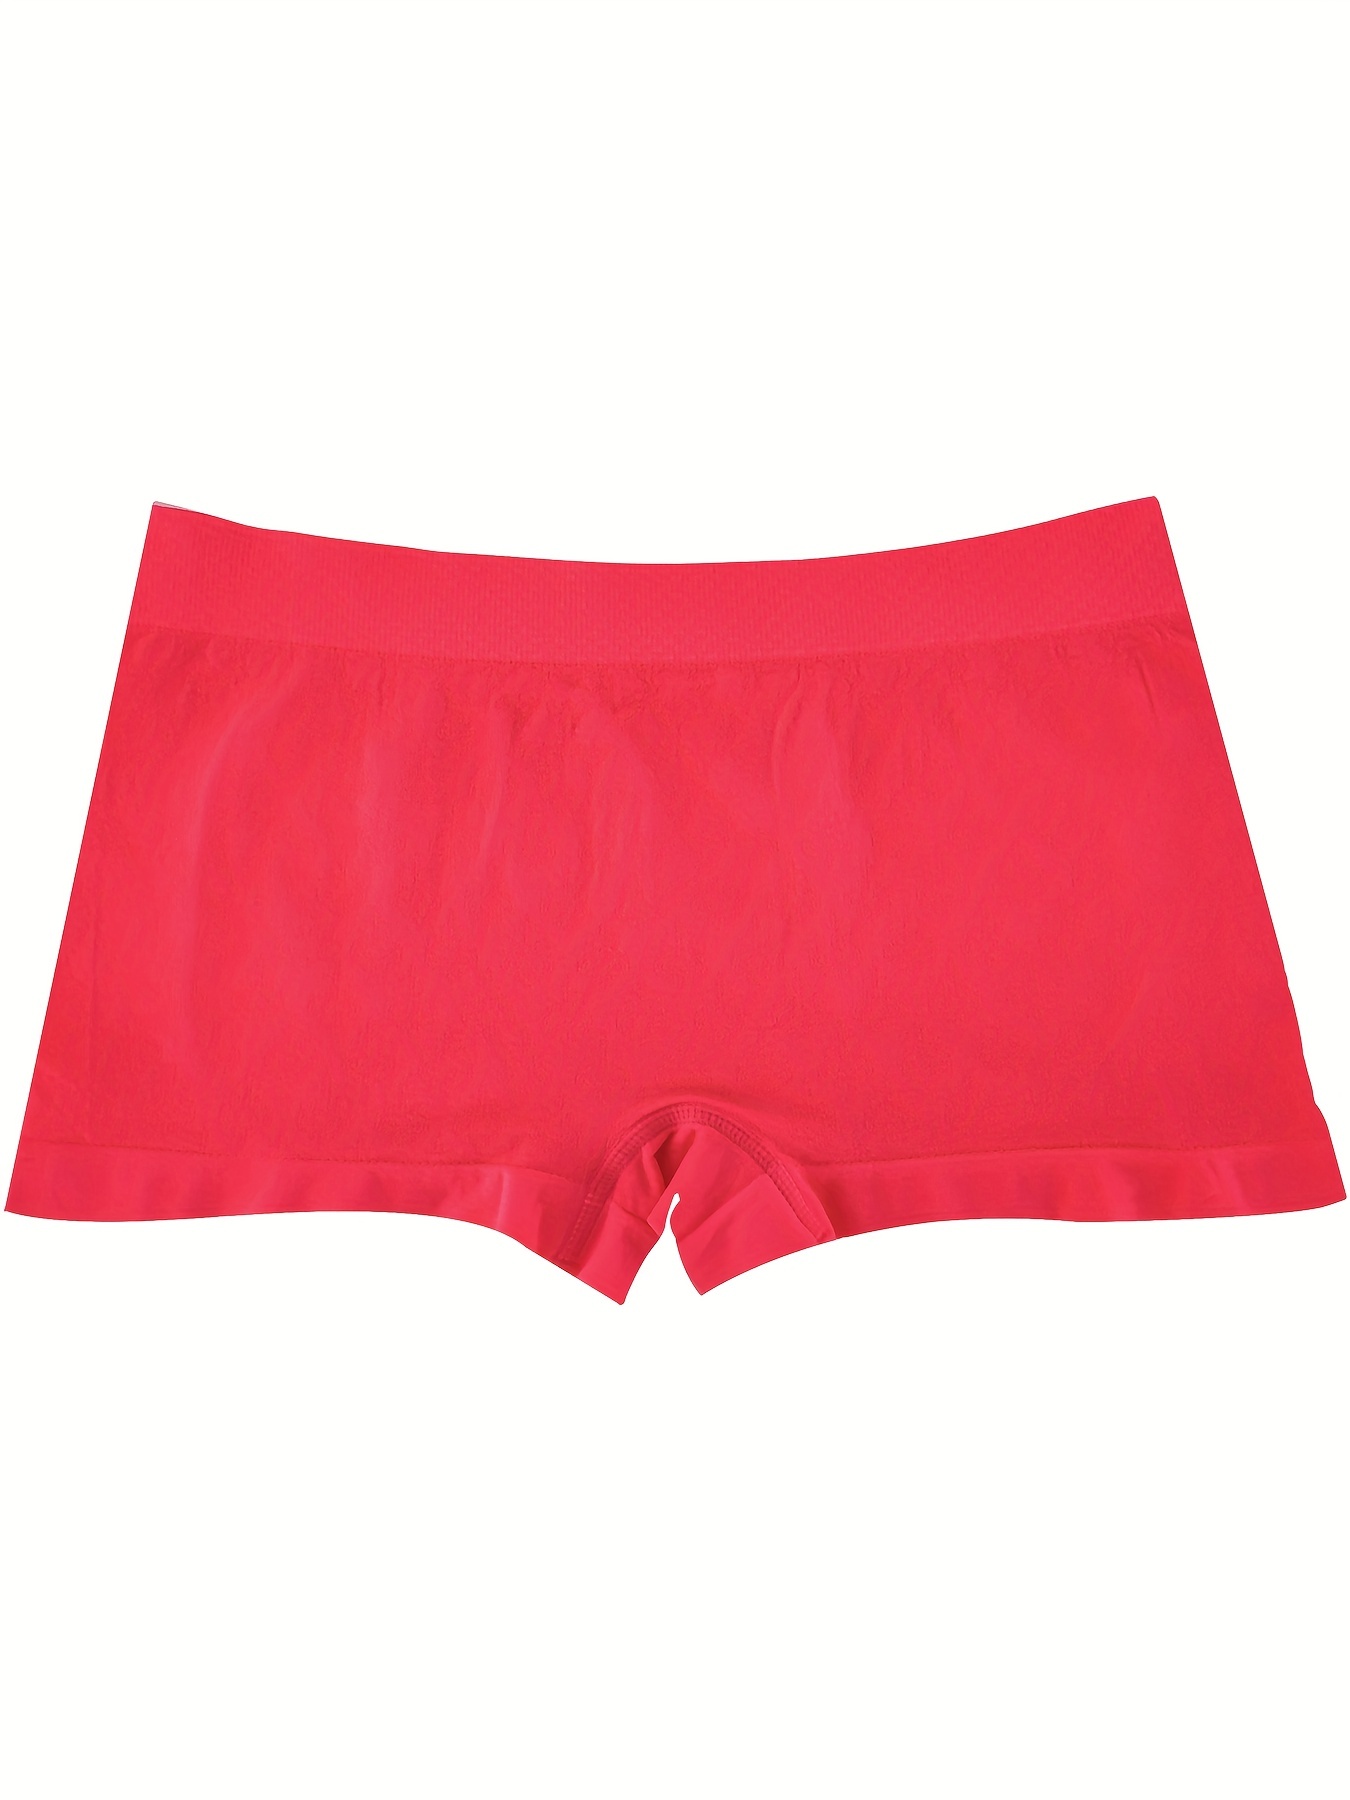 Valentine's Day Spandex Boy Shorts Underwear Pantieswomen Nylon